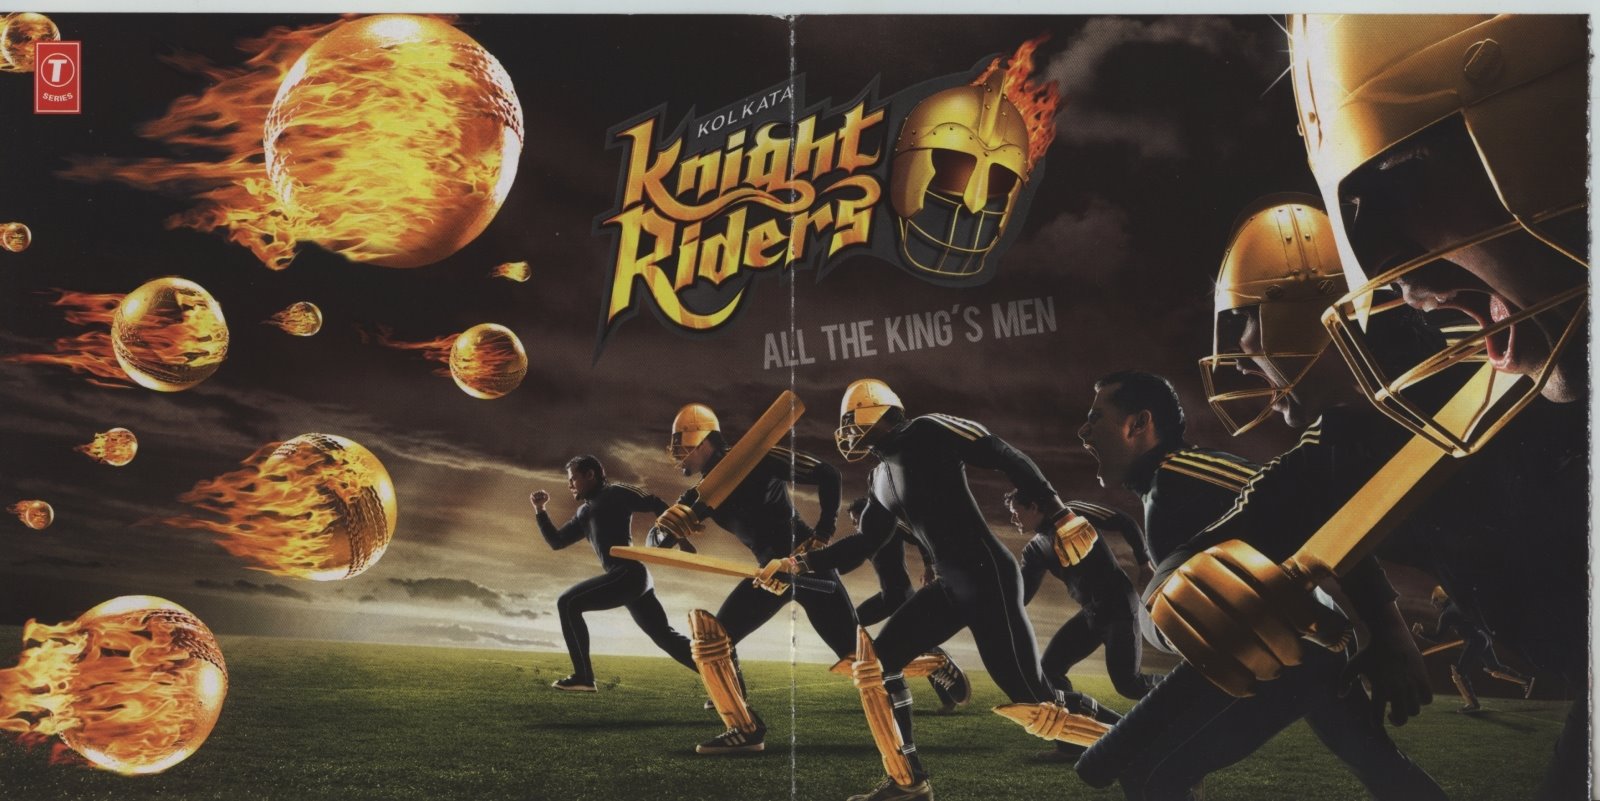 https://blogger.googleusercontent.com/img/b/R29vZ2xl/AVvXsEhJXmMF7Ed4KcIAettdbQGcsidvmLh5Qfn5ImfUq7WRONIBFmiSjhyphenhyphenIYPi4P3rOmLKObL2qLU9WJJnxGKtDUJyoMEgvBTWvwwNG2jN6DBYVTr2mXznQR8vYVfJbGCfy6pWZgS_Ax4SsEiv1/s1600/too_super_too_cool_kolkata_knight_riders_sharukh_khan.jpg